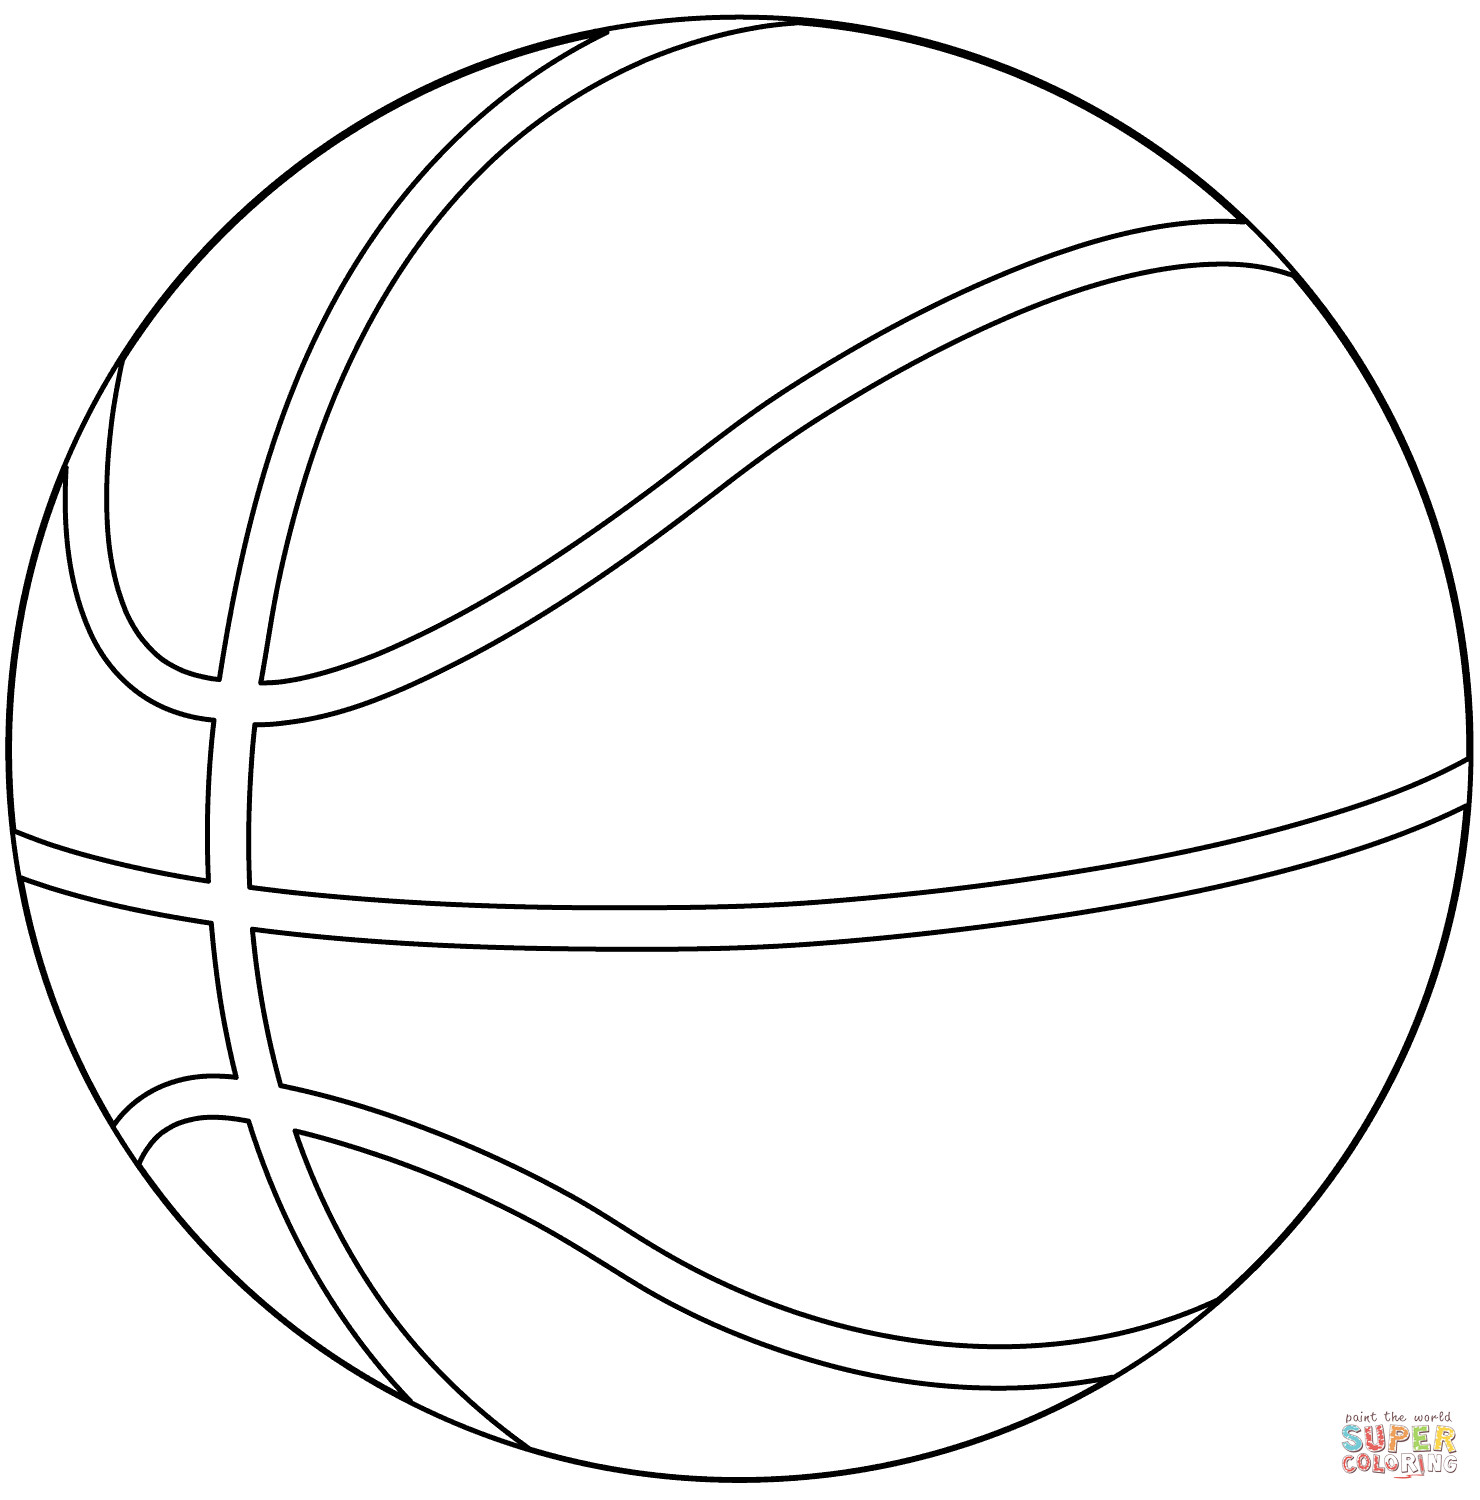 Printable Basketball Coloring Pages
 Basketball ball coloring page